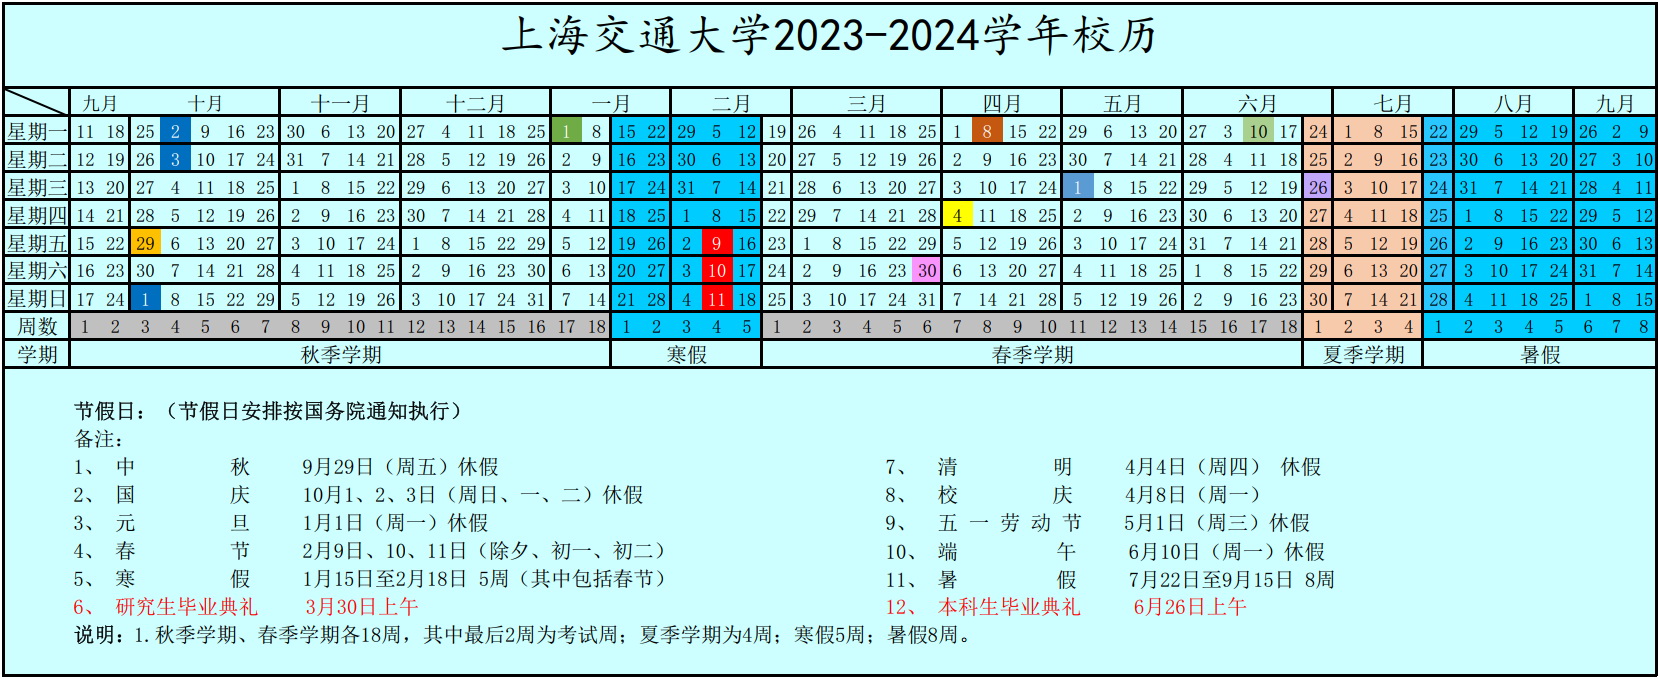 Taylor University Academic Calendar 2025